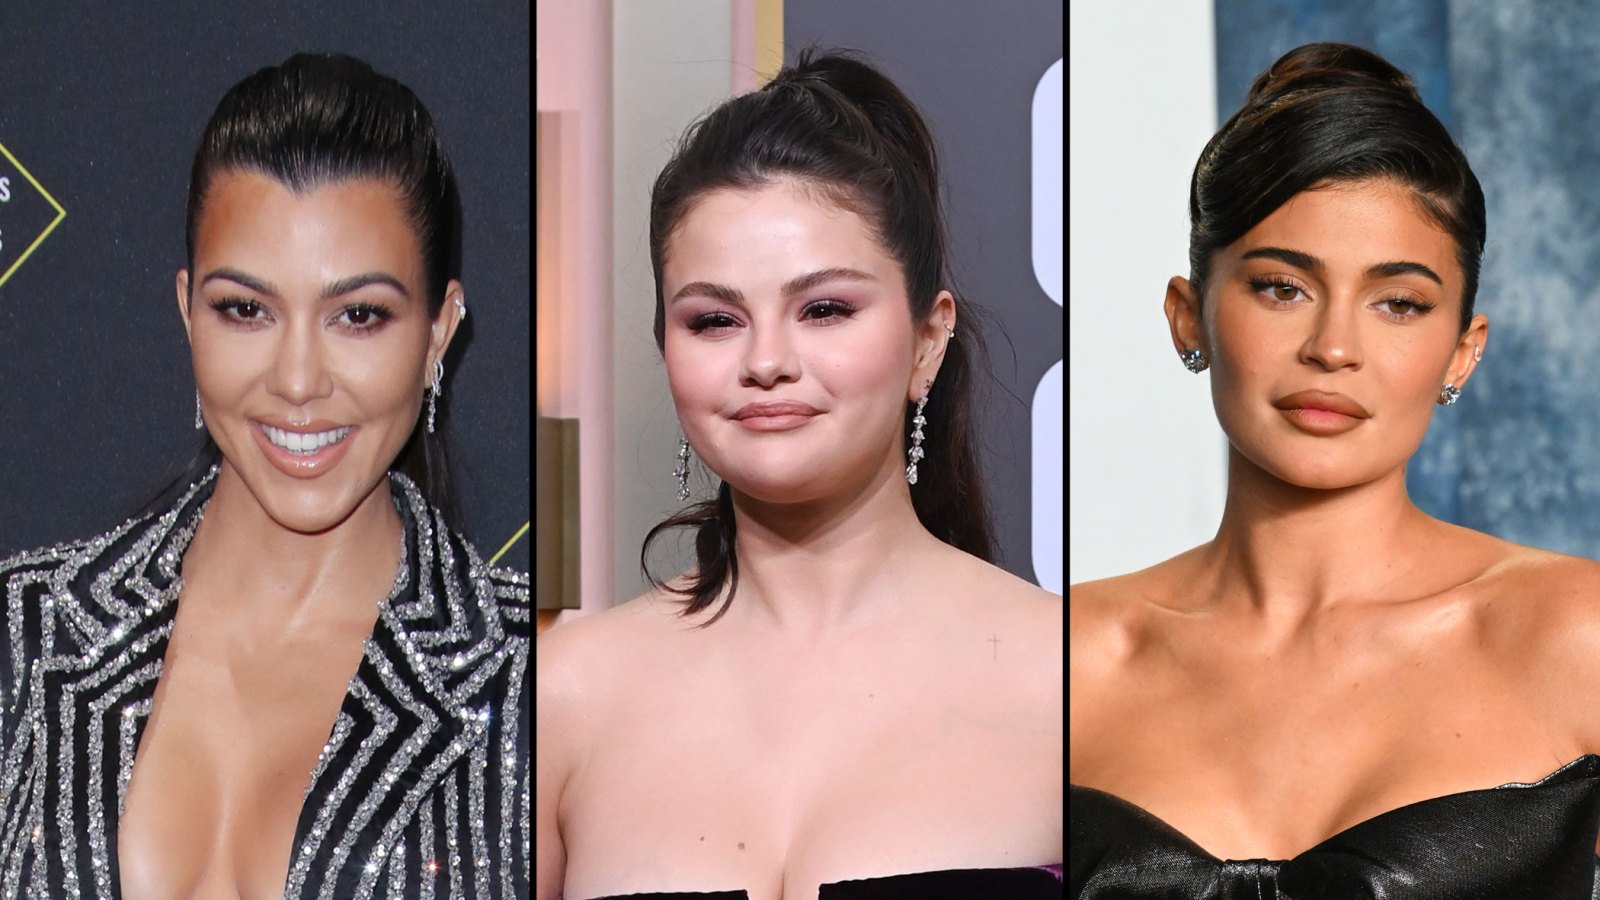 Kourtney Shares Selena Gomez's Song After Kylie Jenner Drama